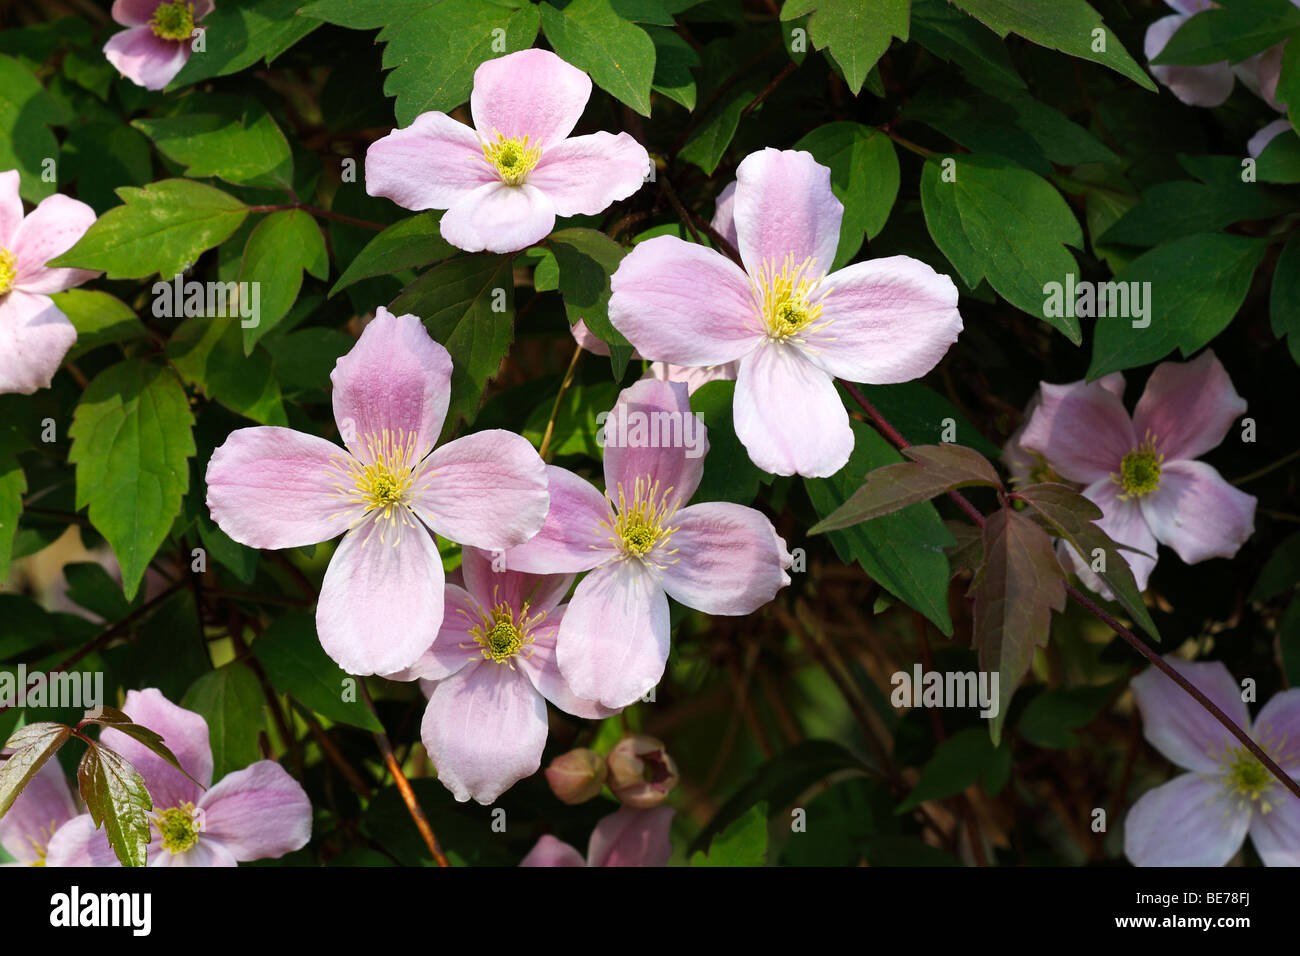 Fioritura clematide Anemone varietà Elizabeth (Clematis montana cultivar  Elisabeth), pianta rampicante Foto stock - Alamy